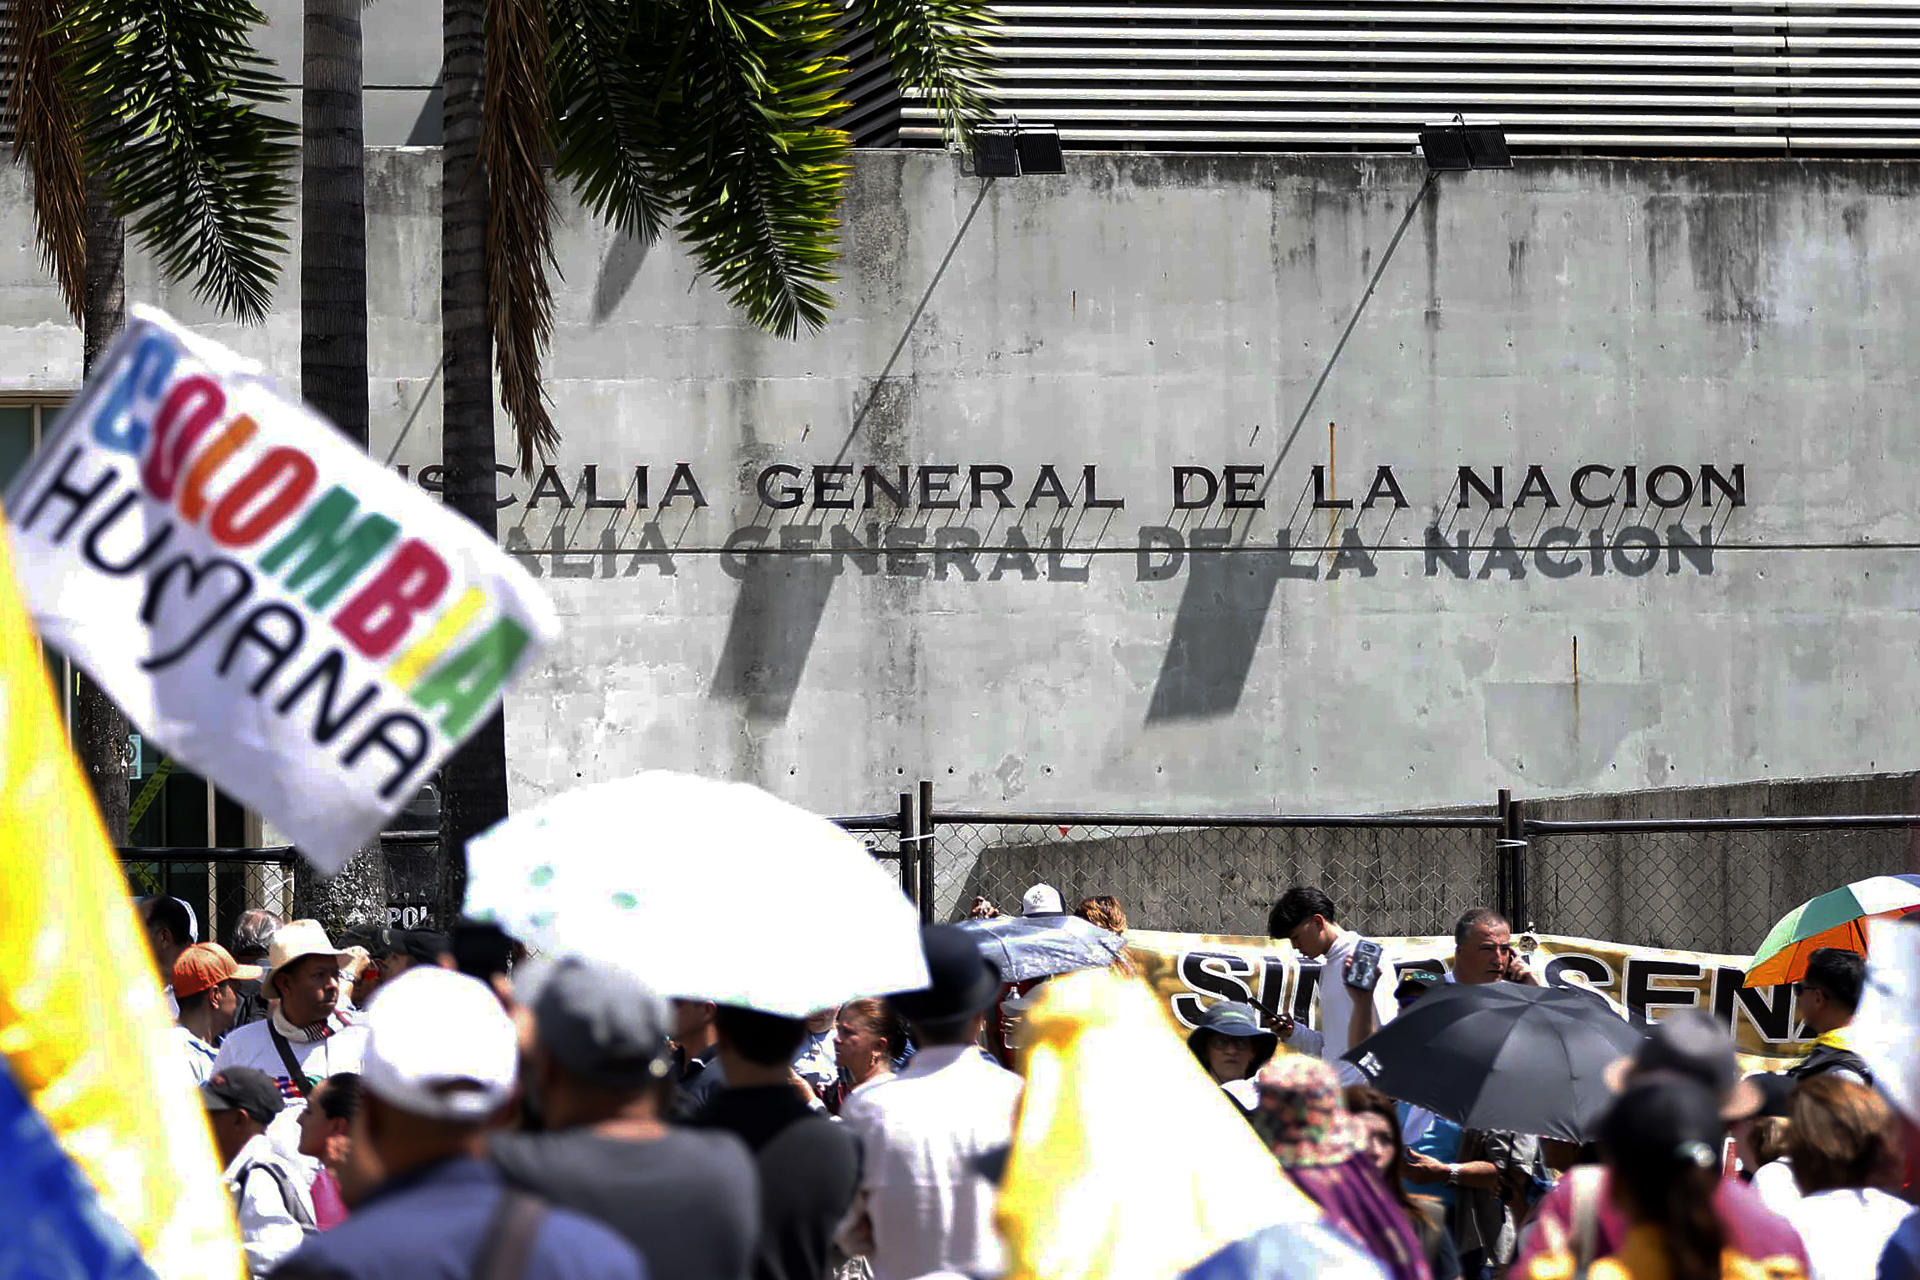 Presidente de la Corte Suprema de Colombia condenó “bloqueo violento e ilegal” a su sede